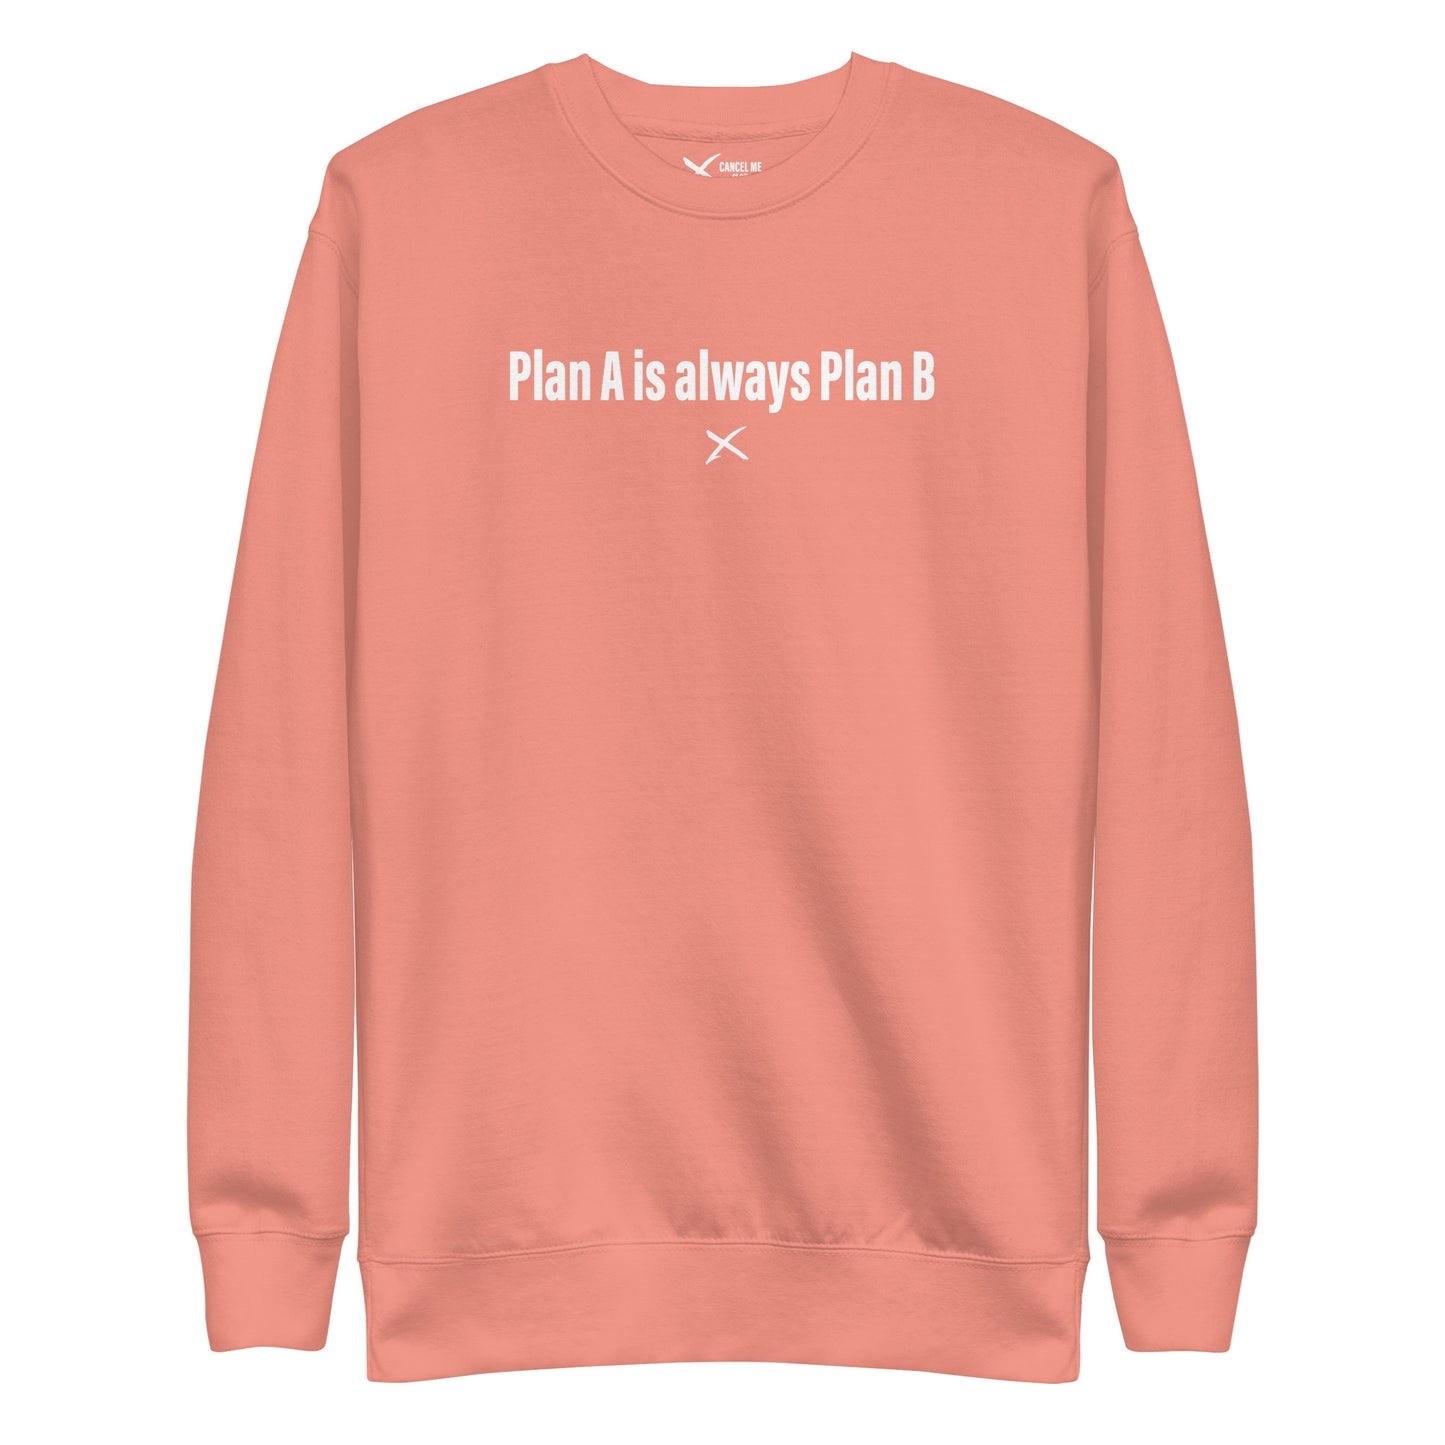 Plan A is always Plan B - Sweatshirt